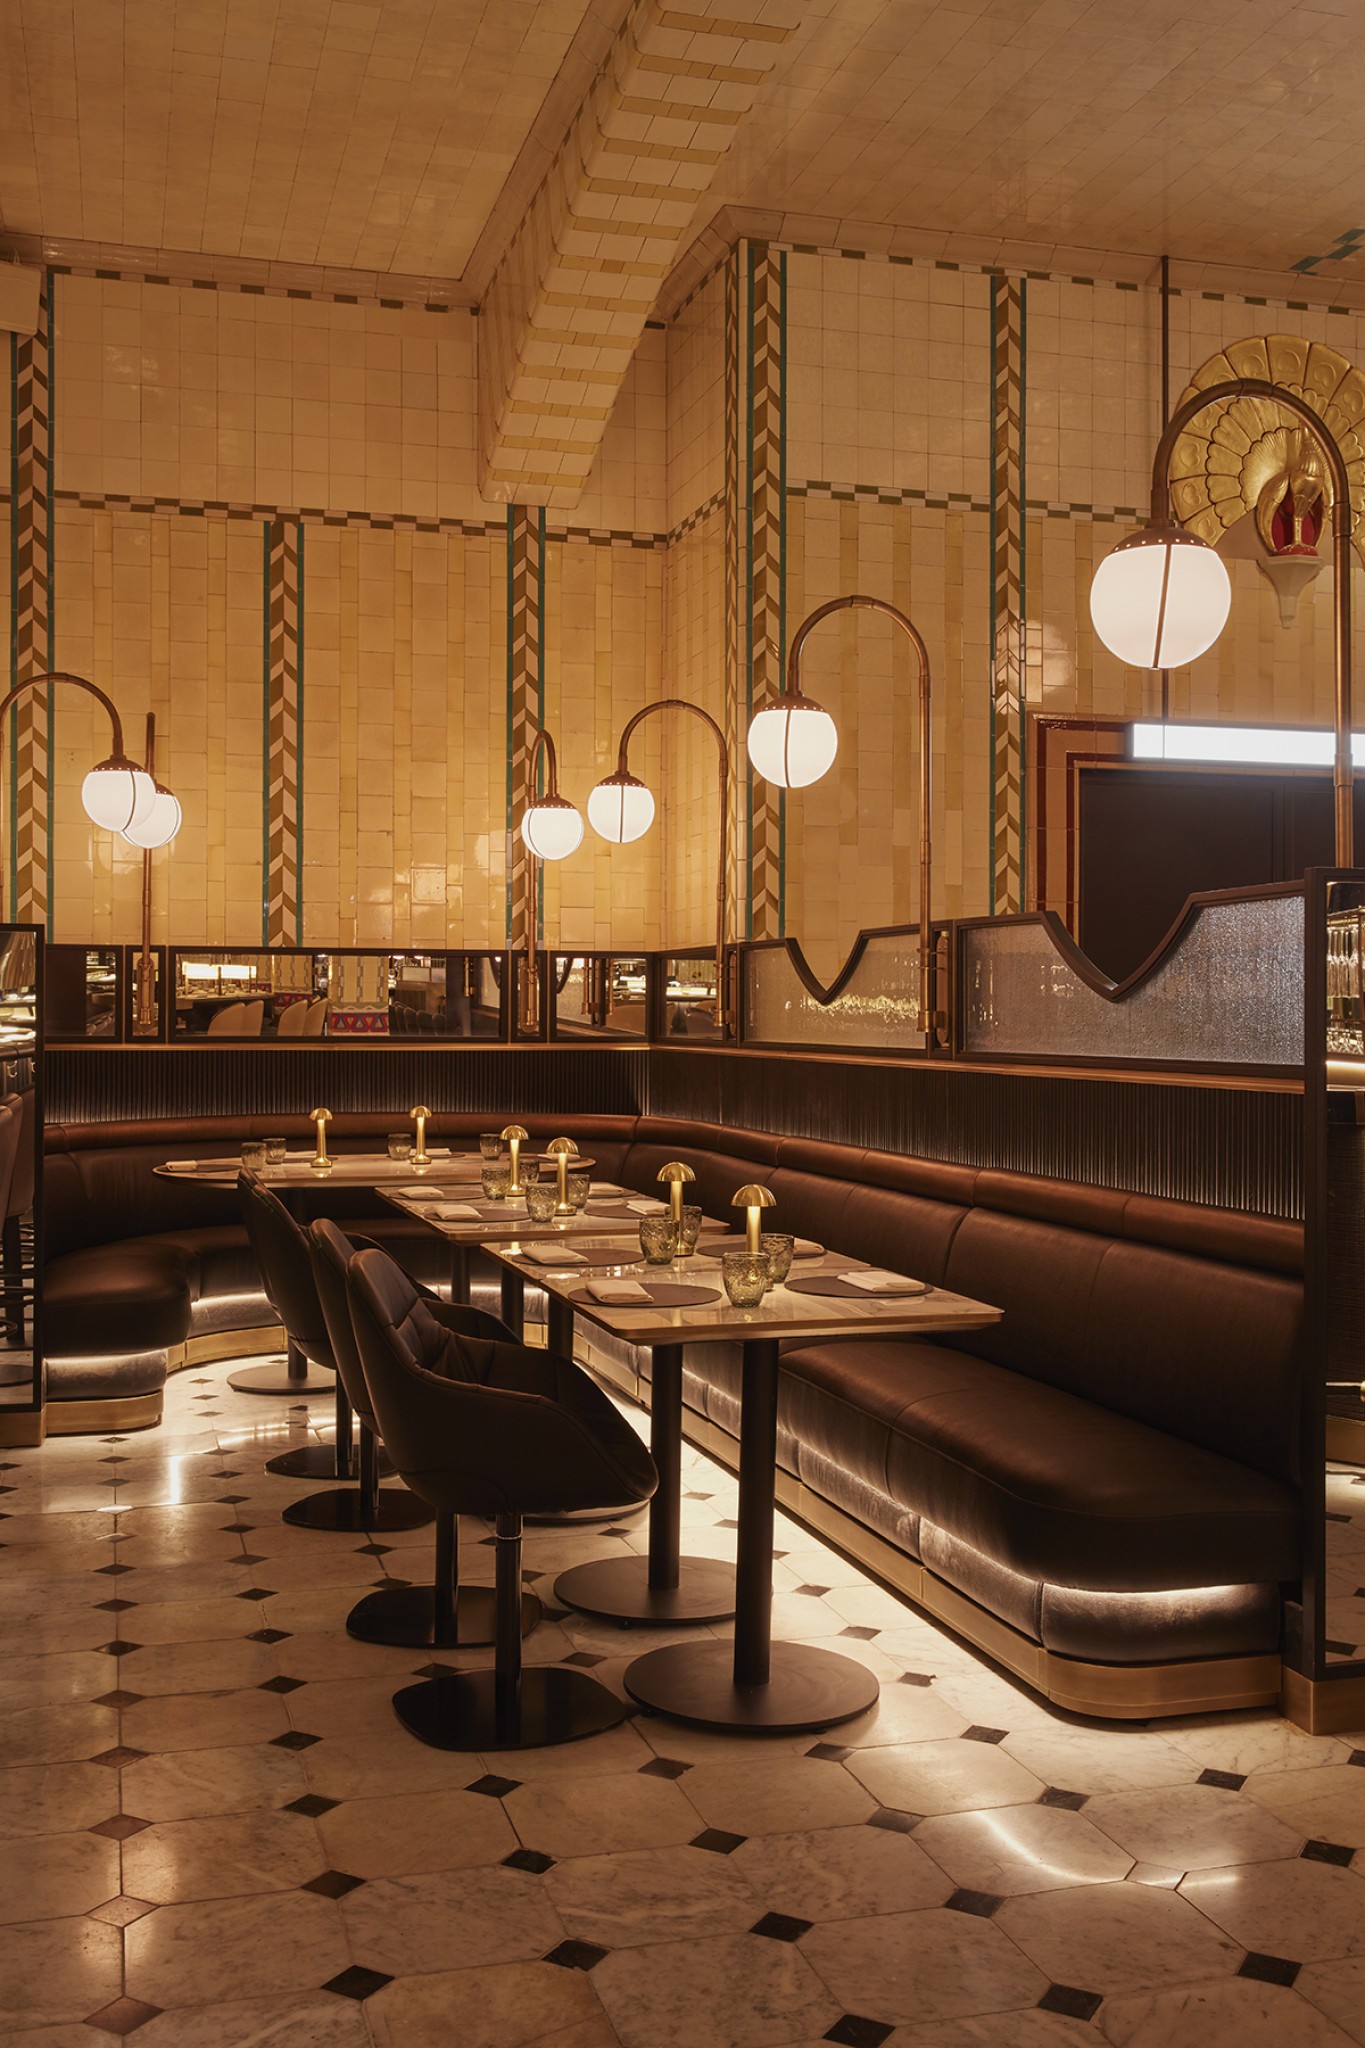 Design International overhauls illumination of Harrods dining hall